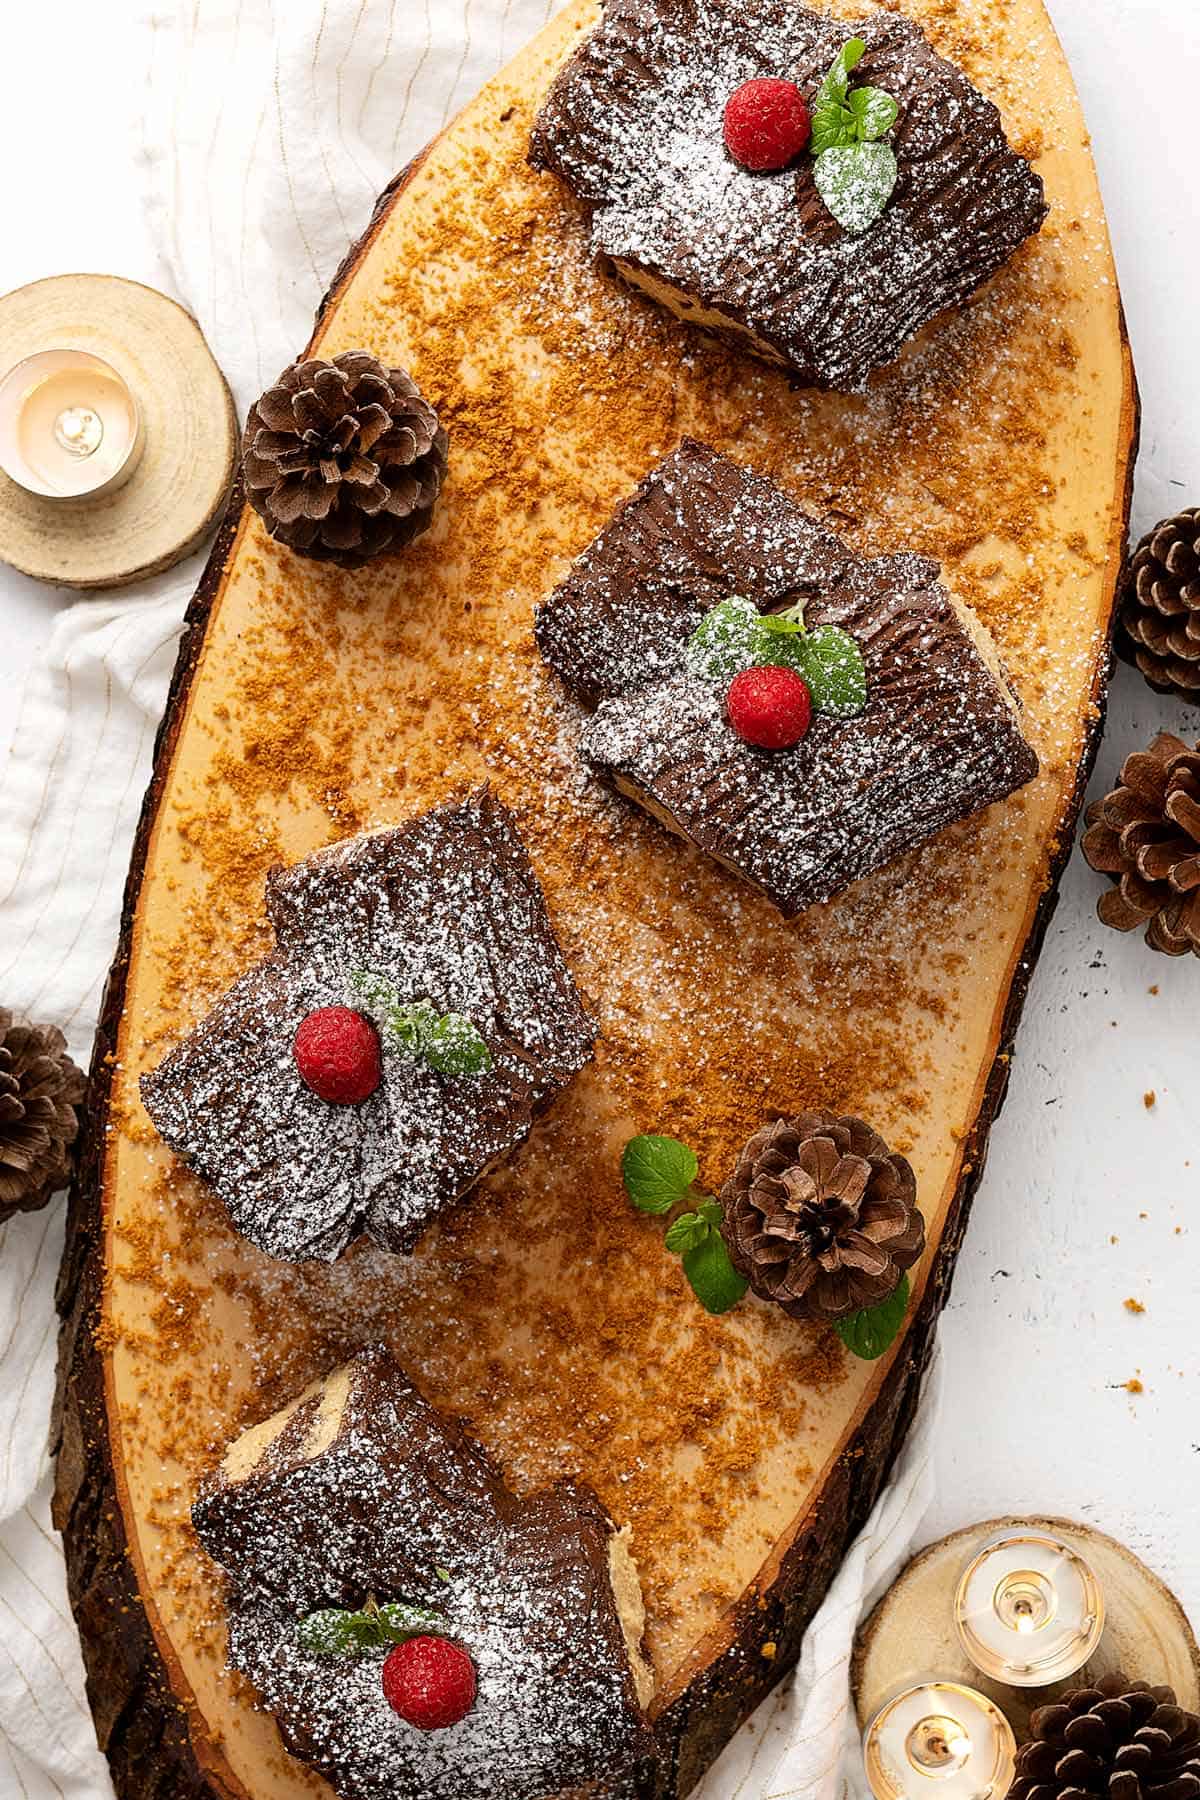 Yule Log Cake (Bûche de Noël) – Lost Recipes Found